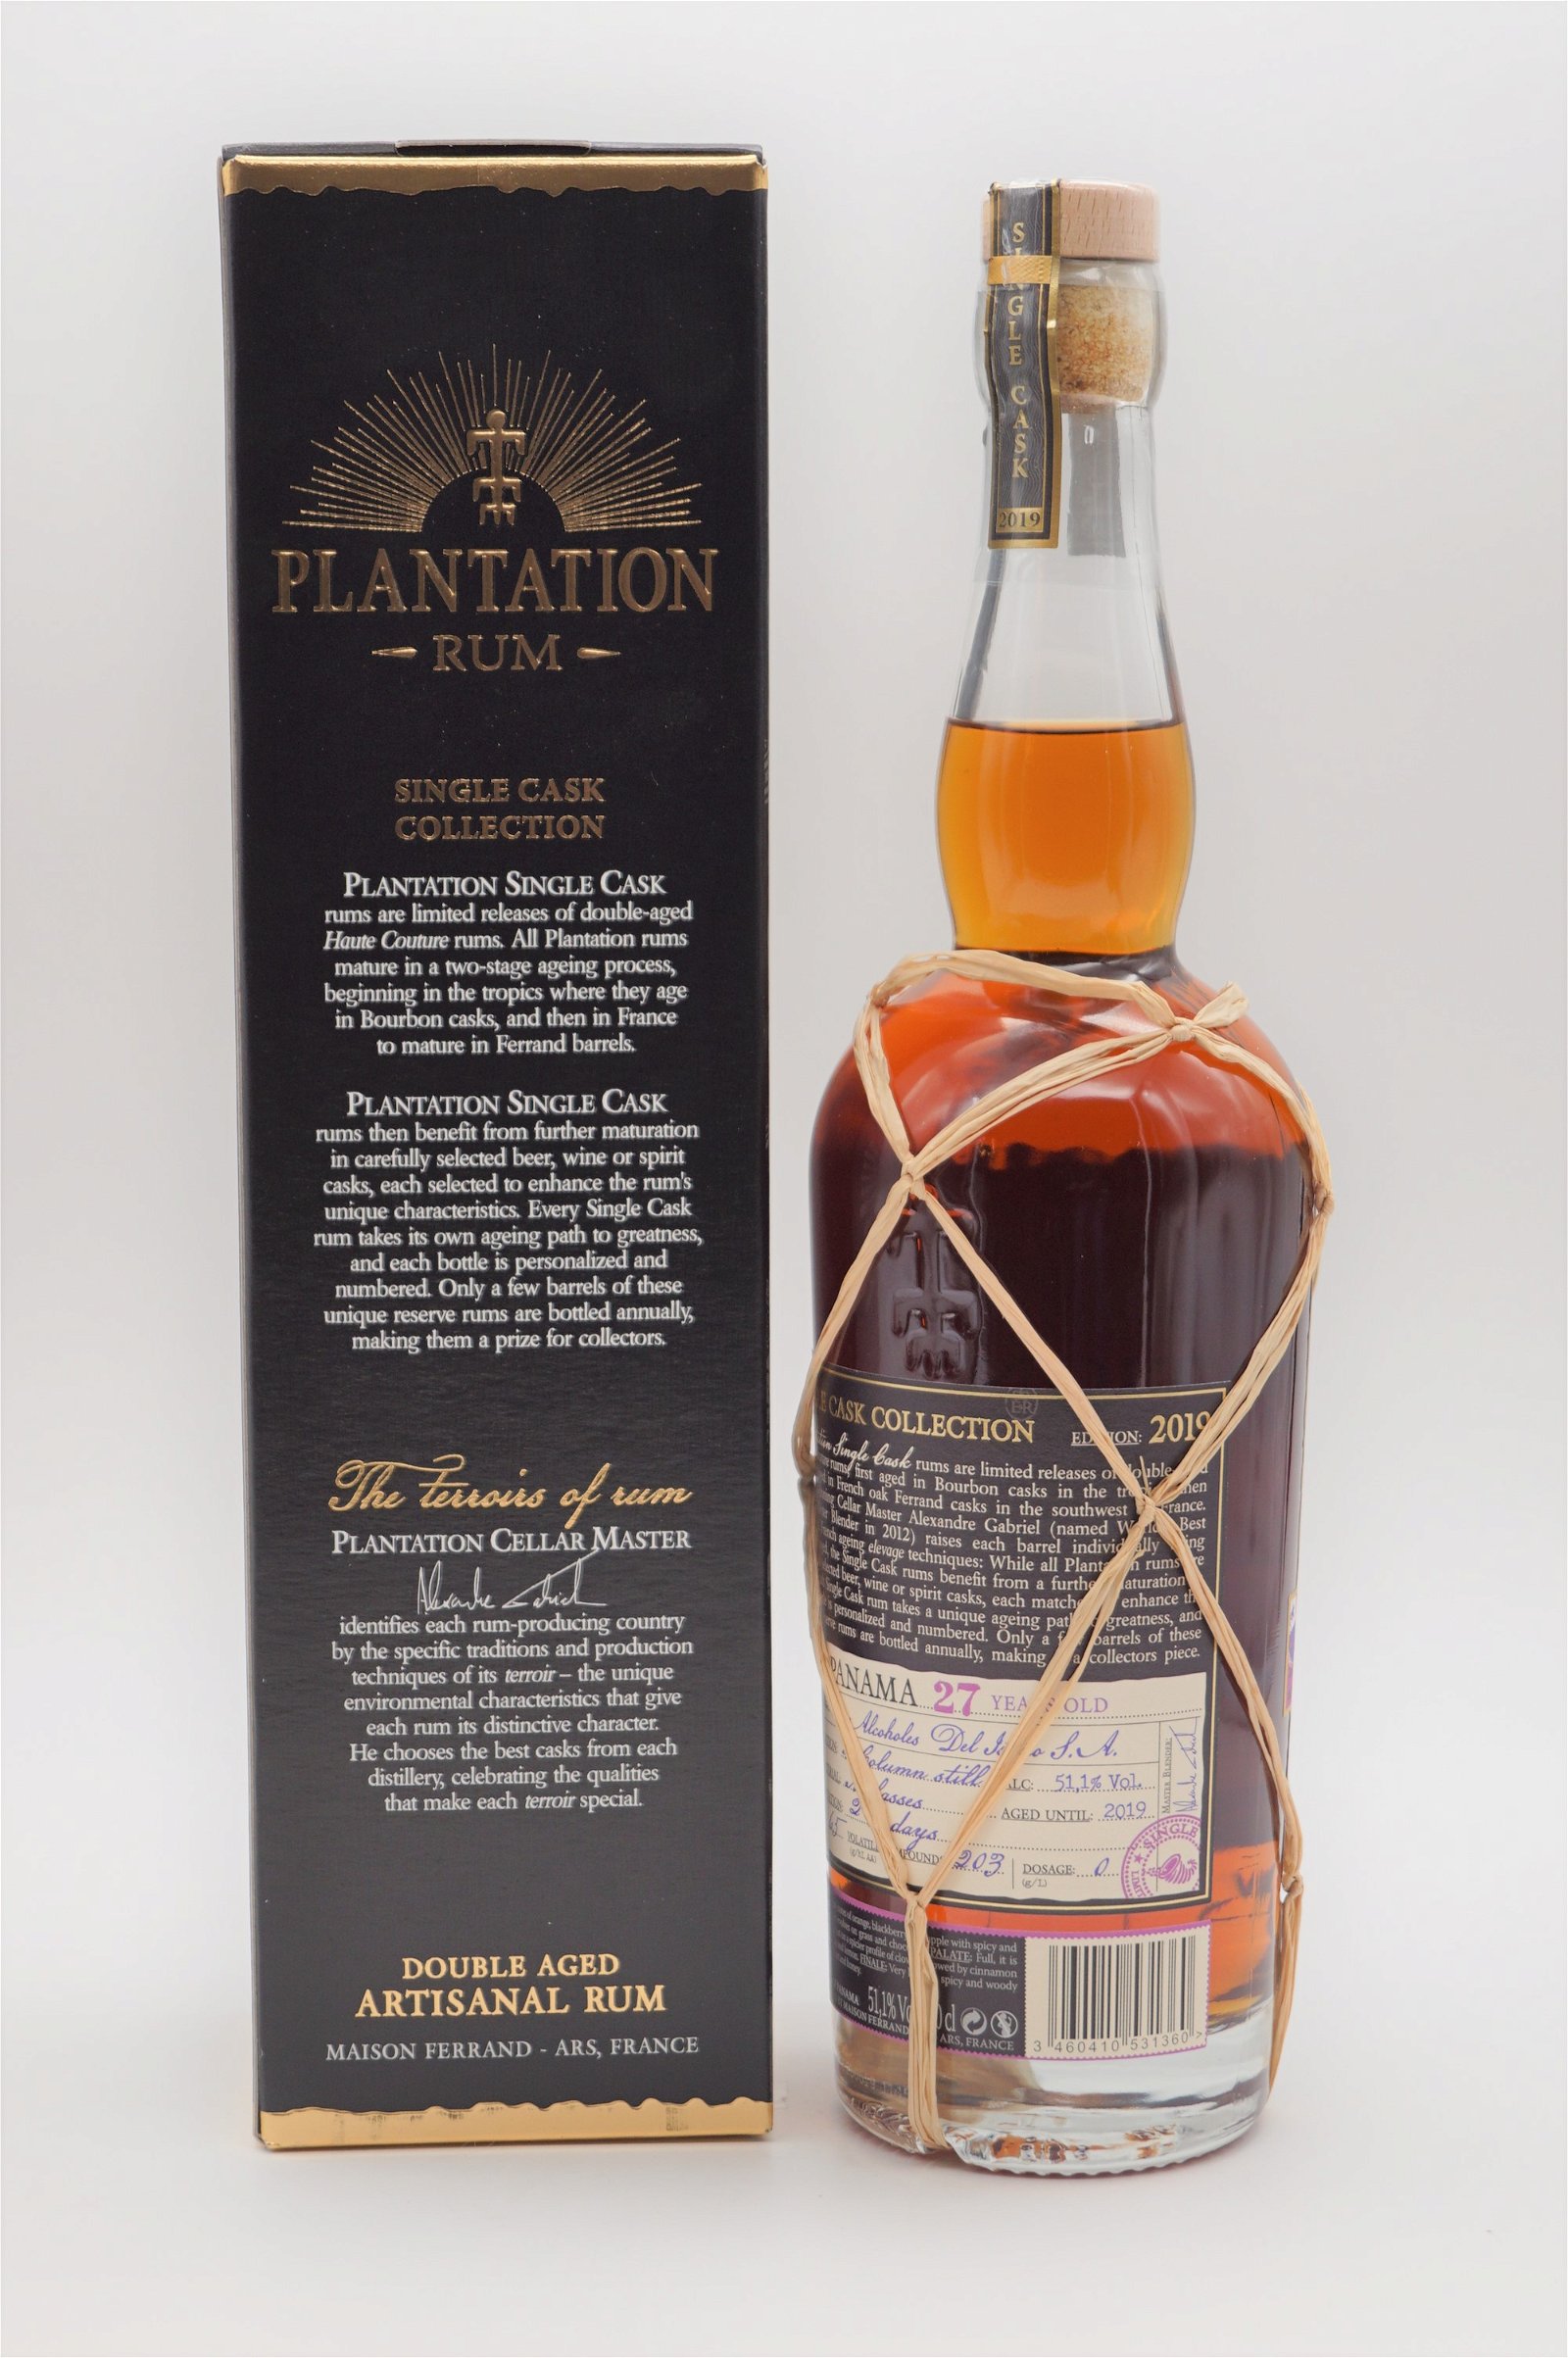 Plantation Rum Panama 27 Jahre Single Cask Collection Teeling Whisky Cask Finish